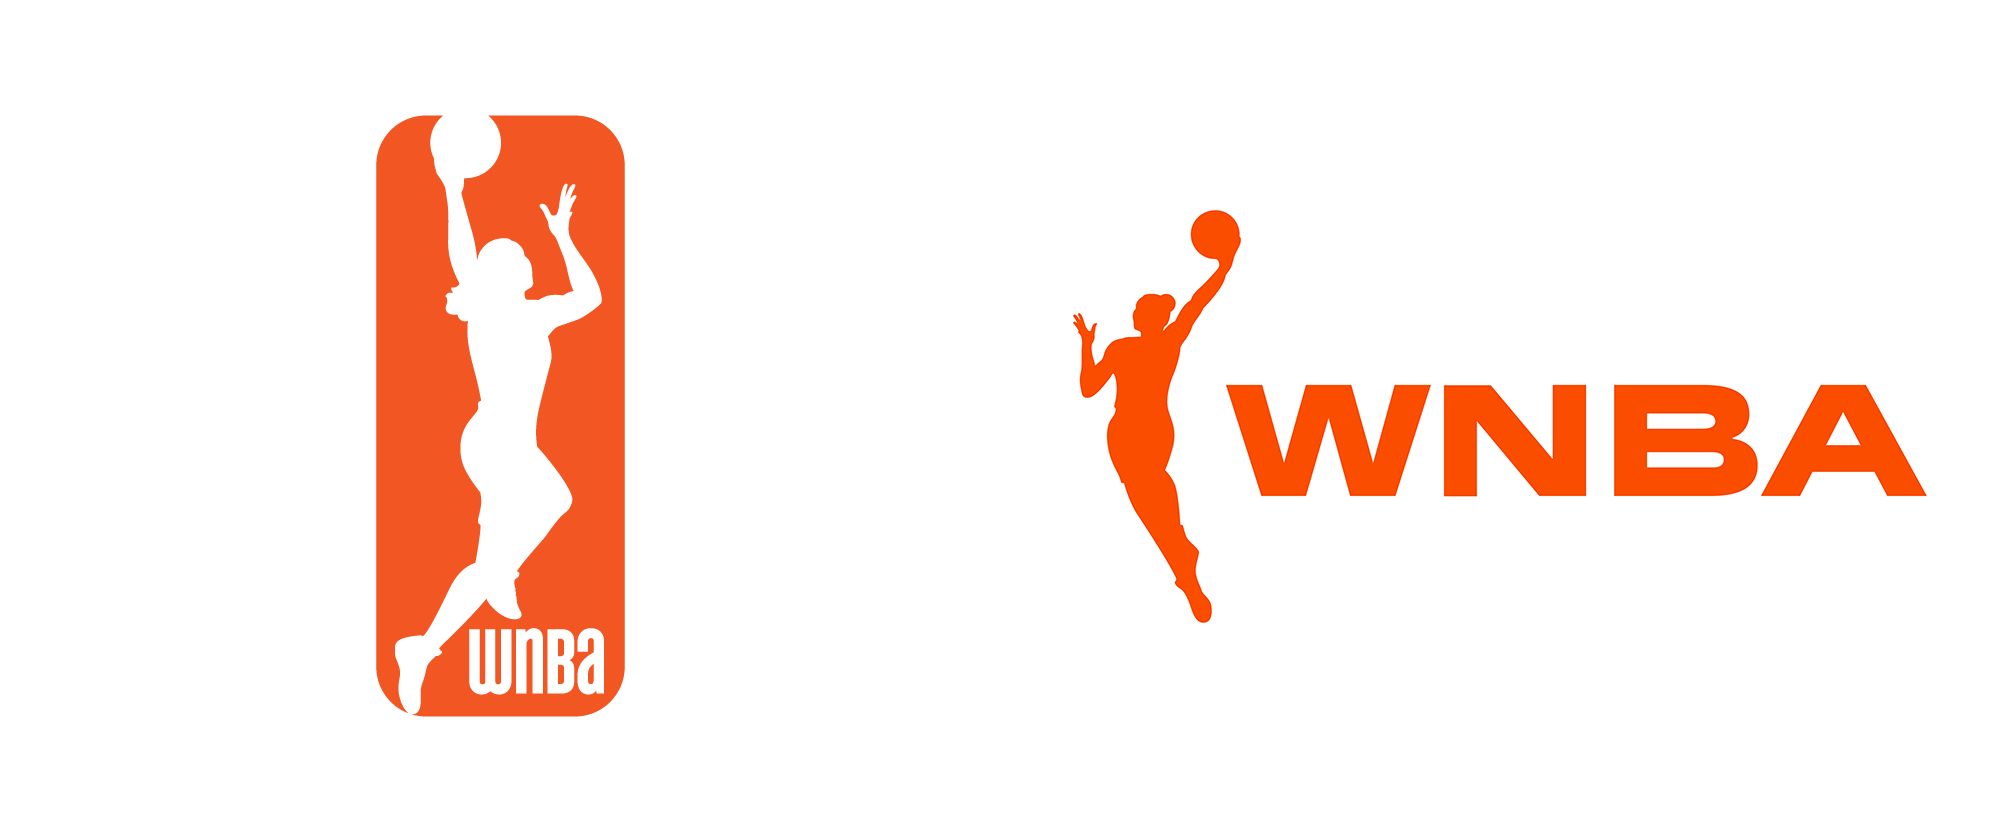 Wnnba Logo - Brand New: New Logo for WNBA by Sylvain Labs